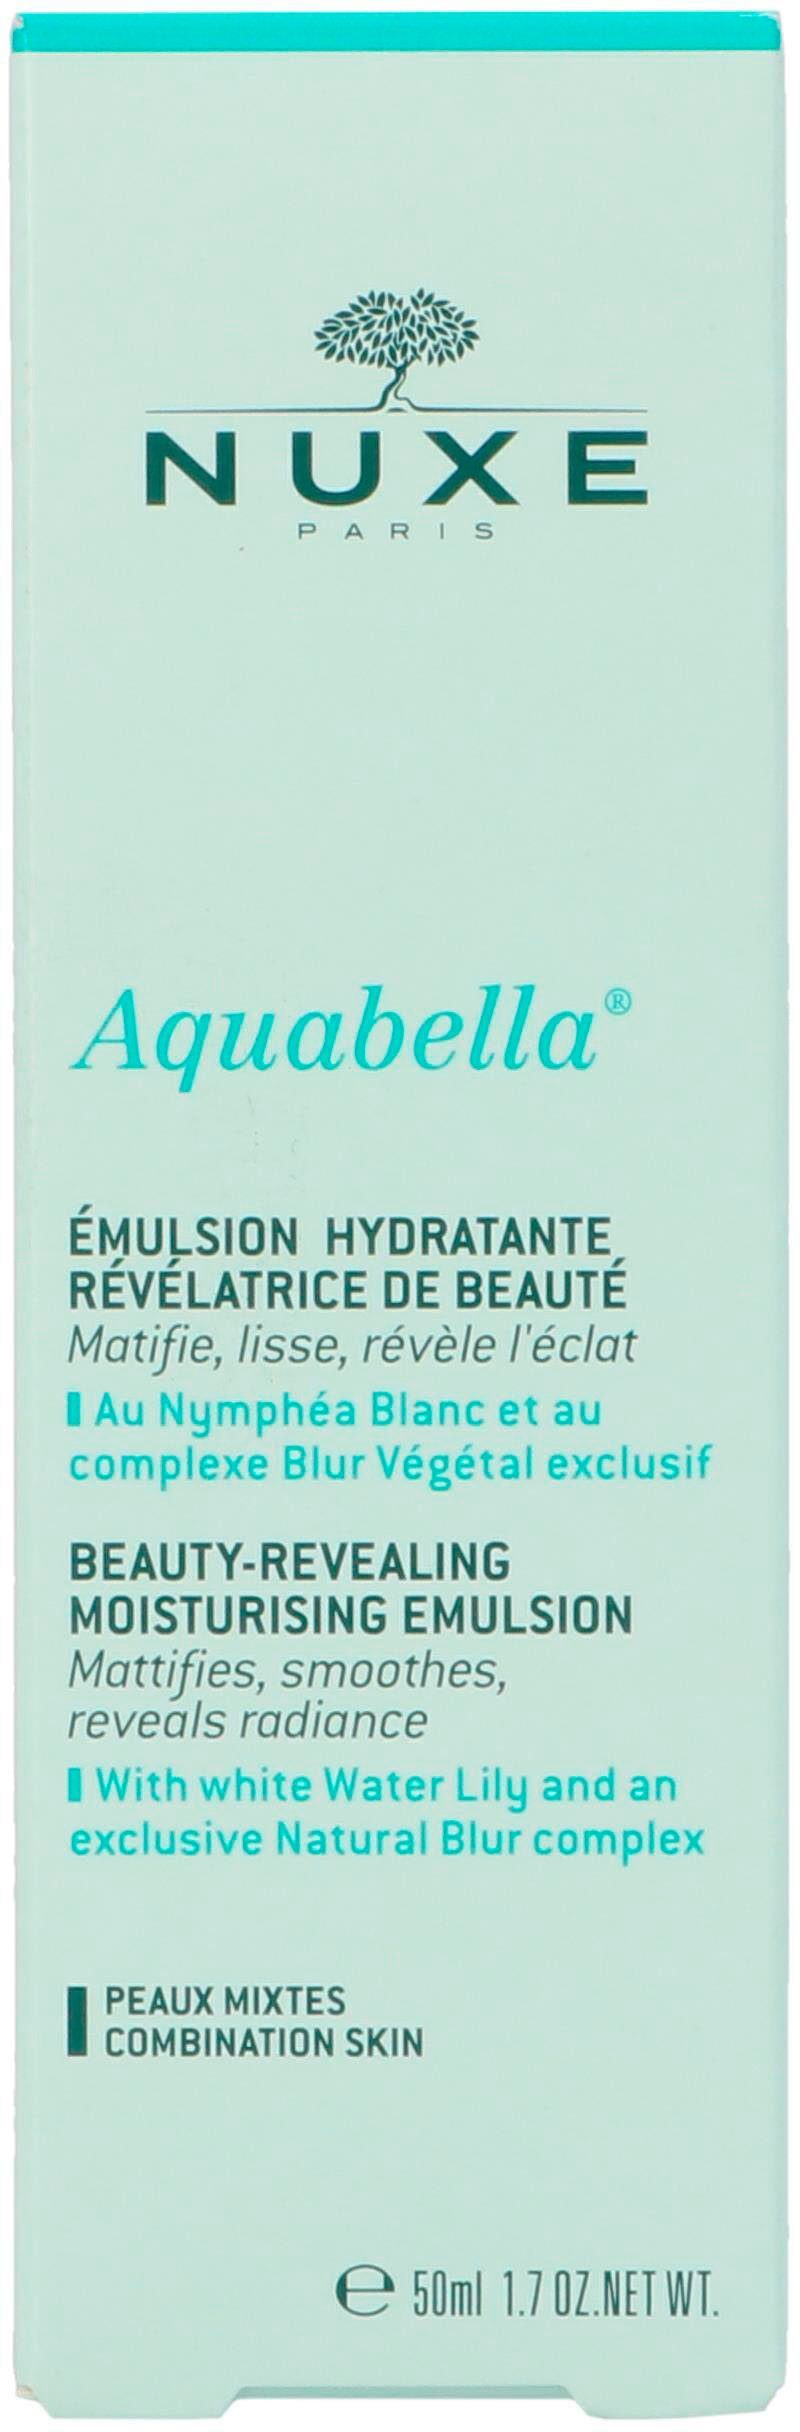 Aquabella Gesichtsserum Revealing Emulsion Beauty Moisturizing Nuxe